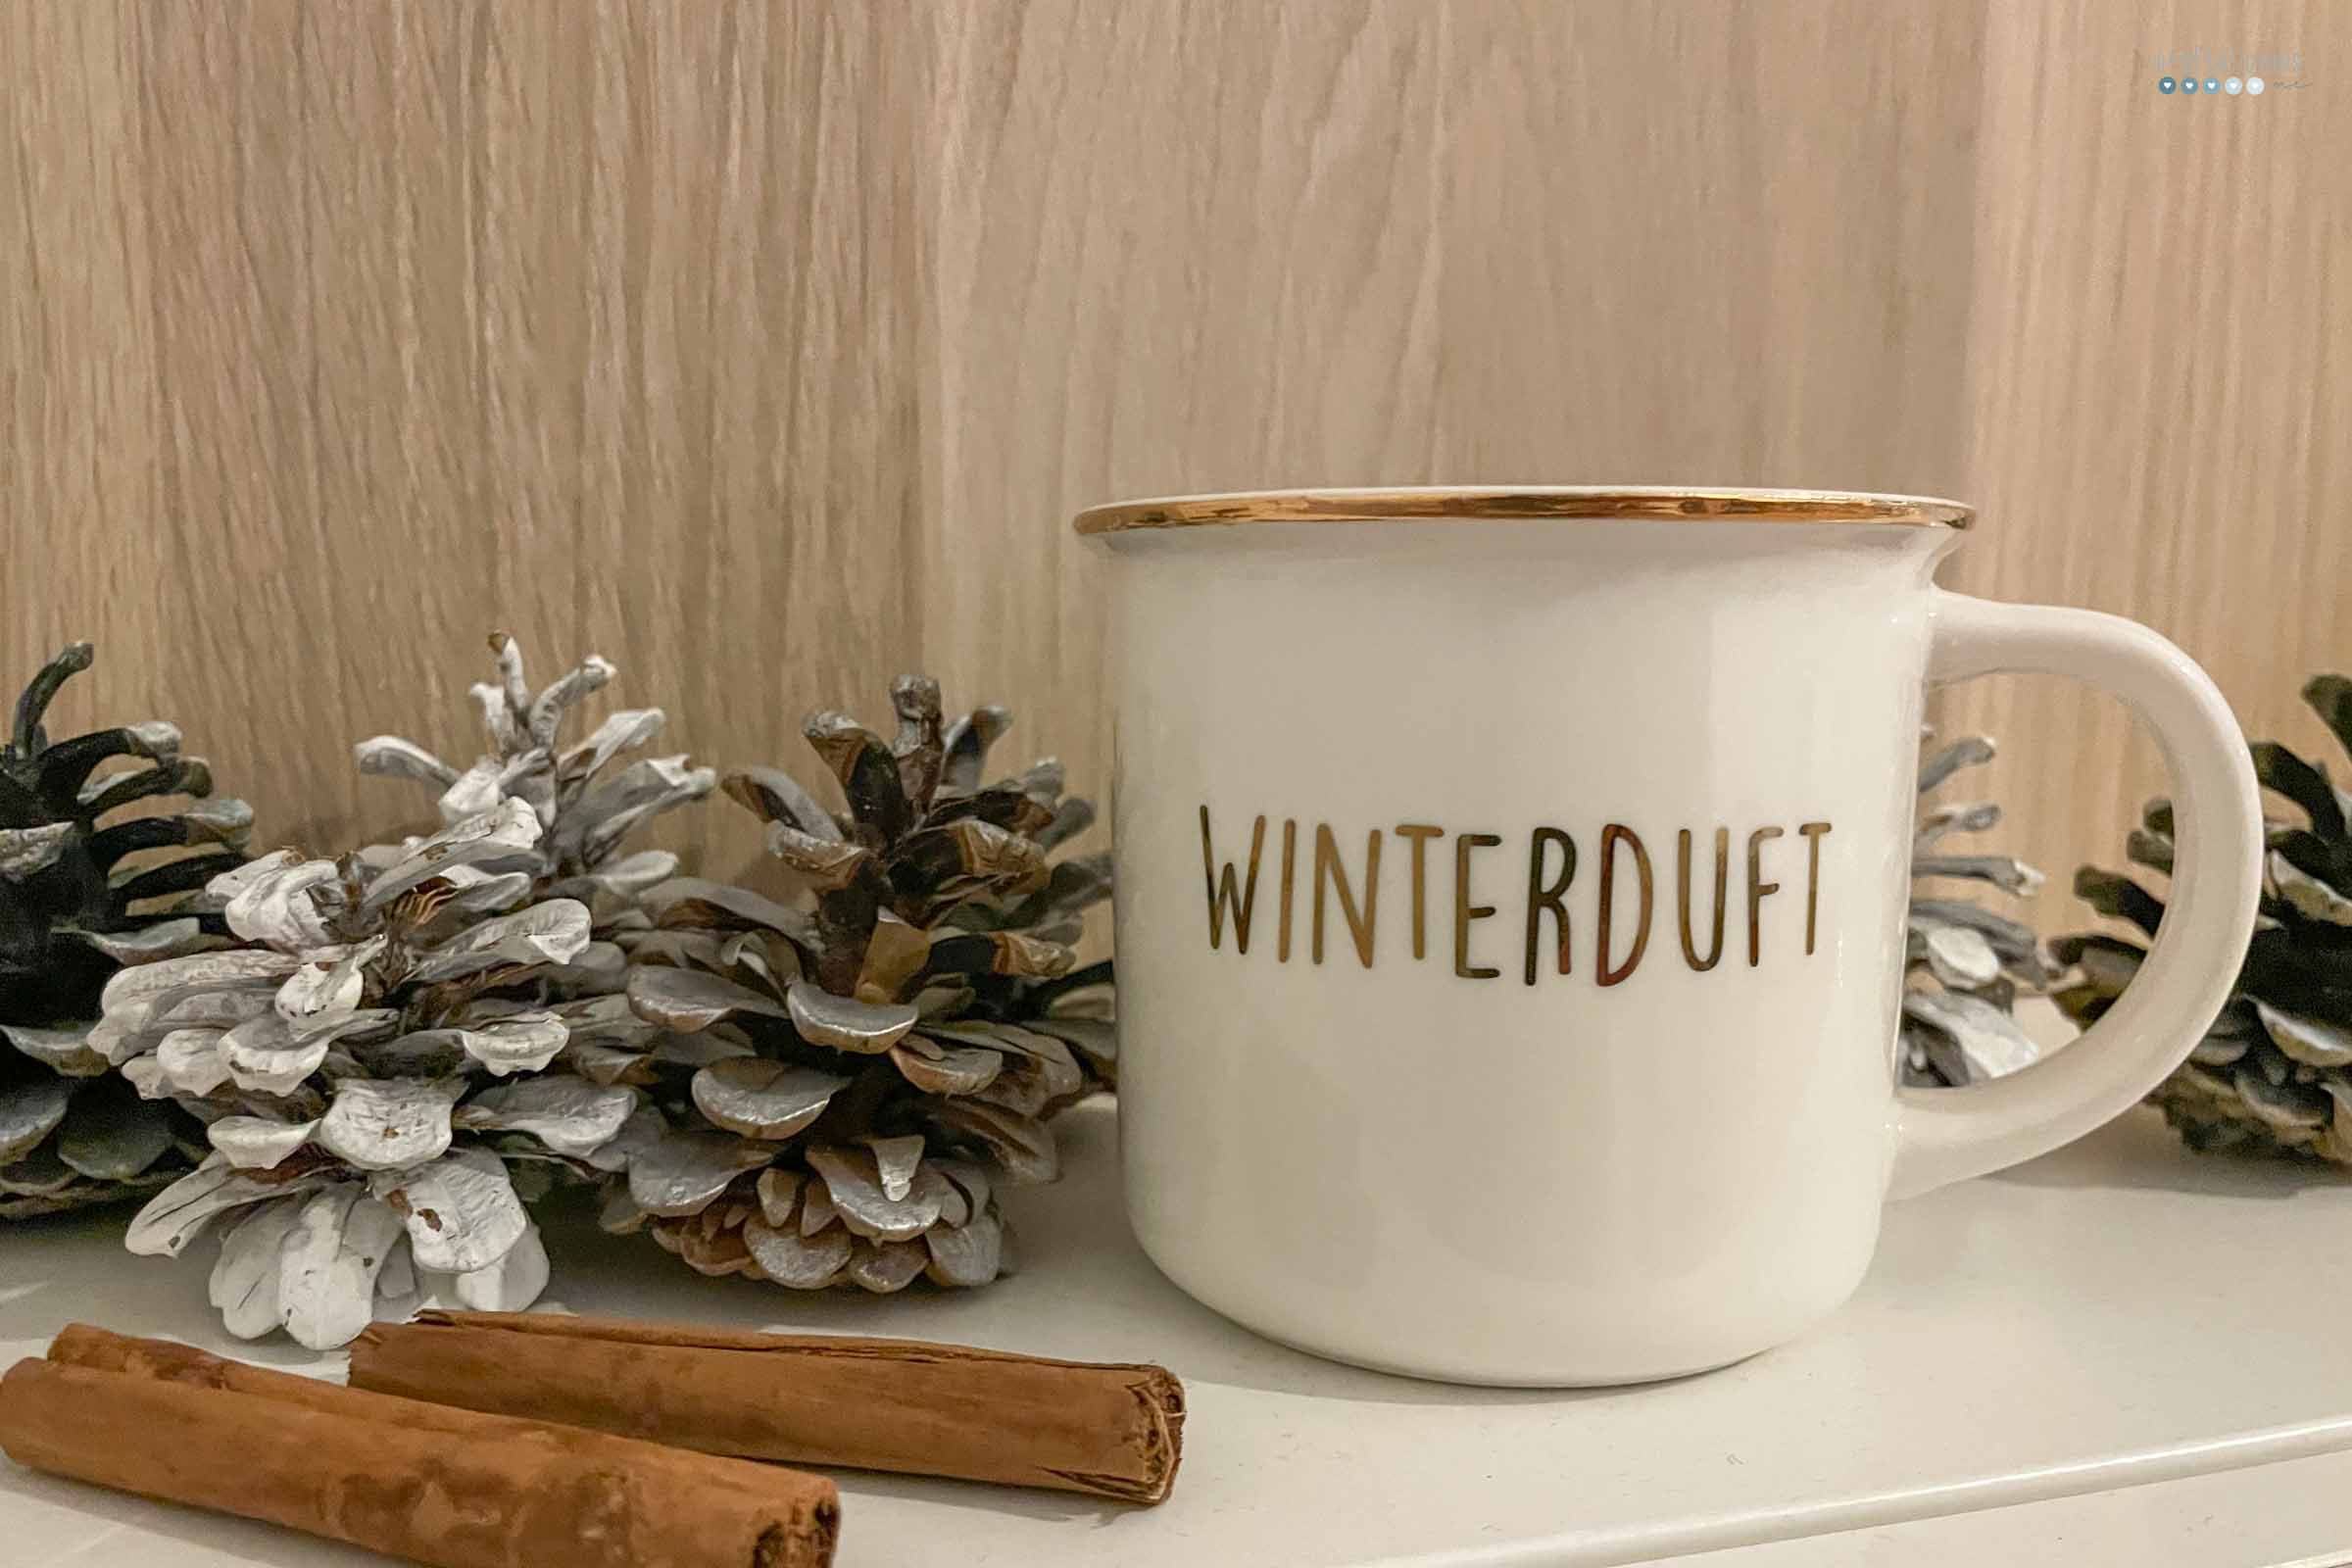 virtual coffee date December mug winterduft